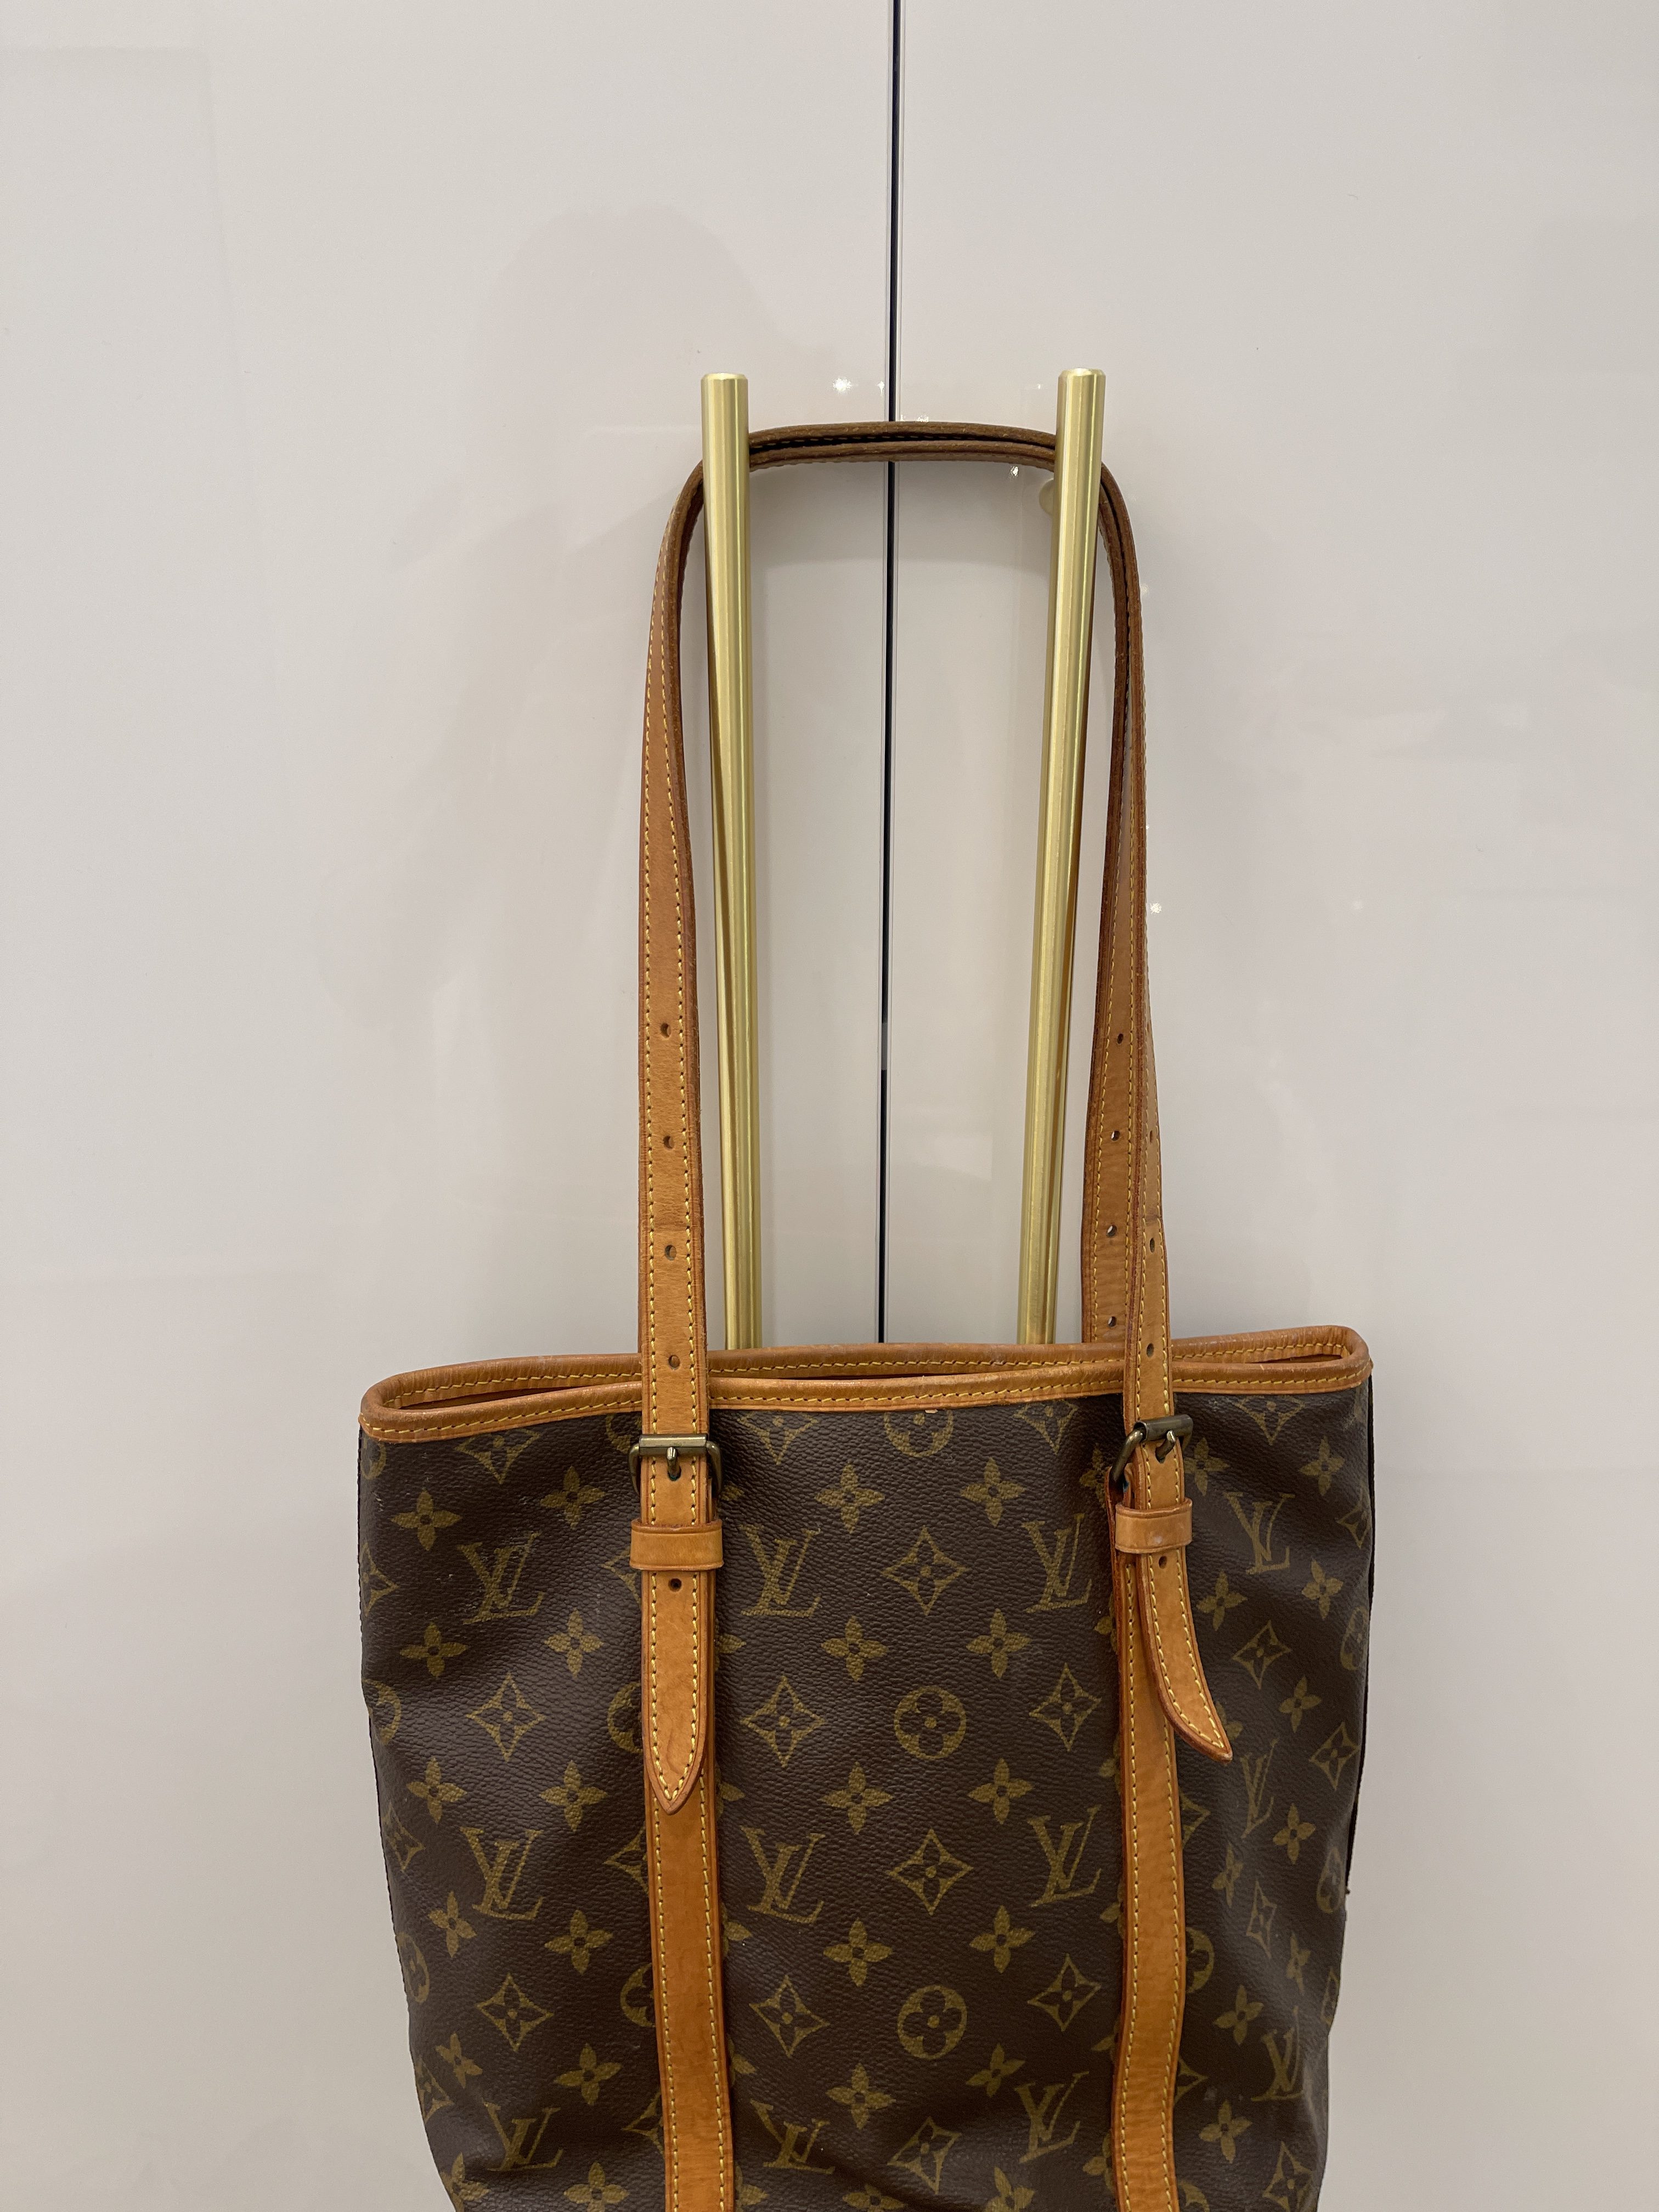 Restoration of Sticky Louis Vuitton Monogram Bucket Bag 27 - Yourgreatfinds